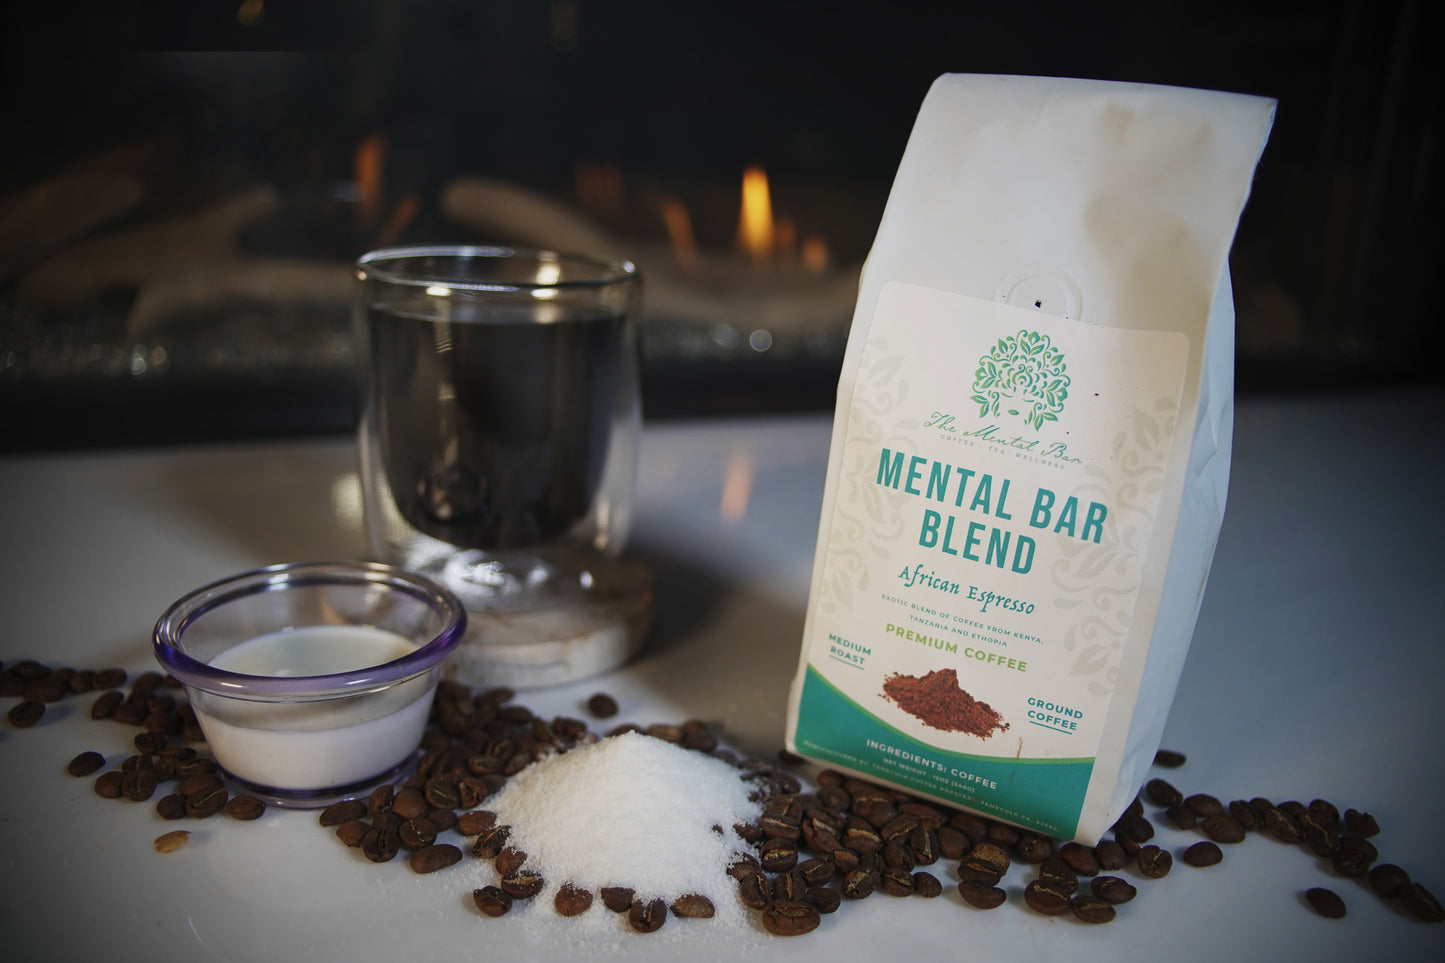 The Mental Bar Blend (African Espresso)